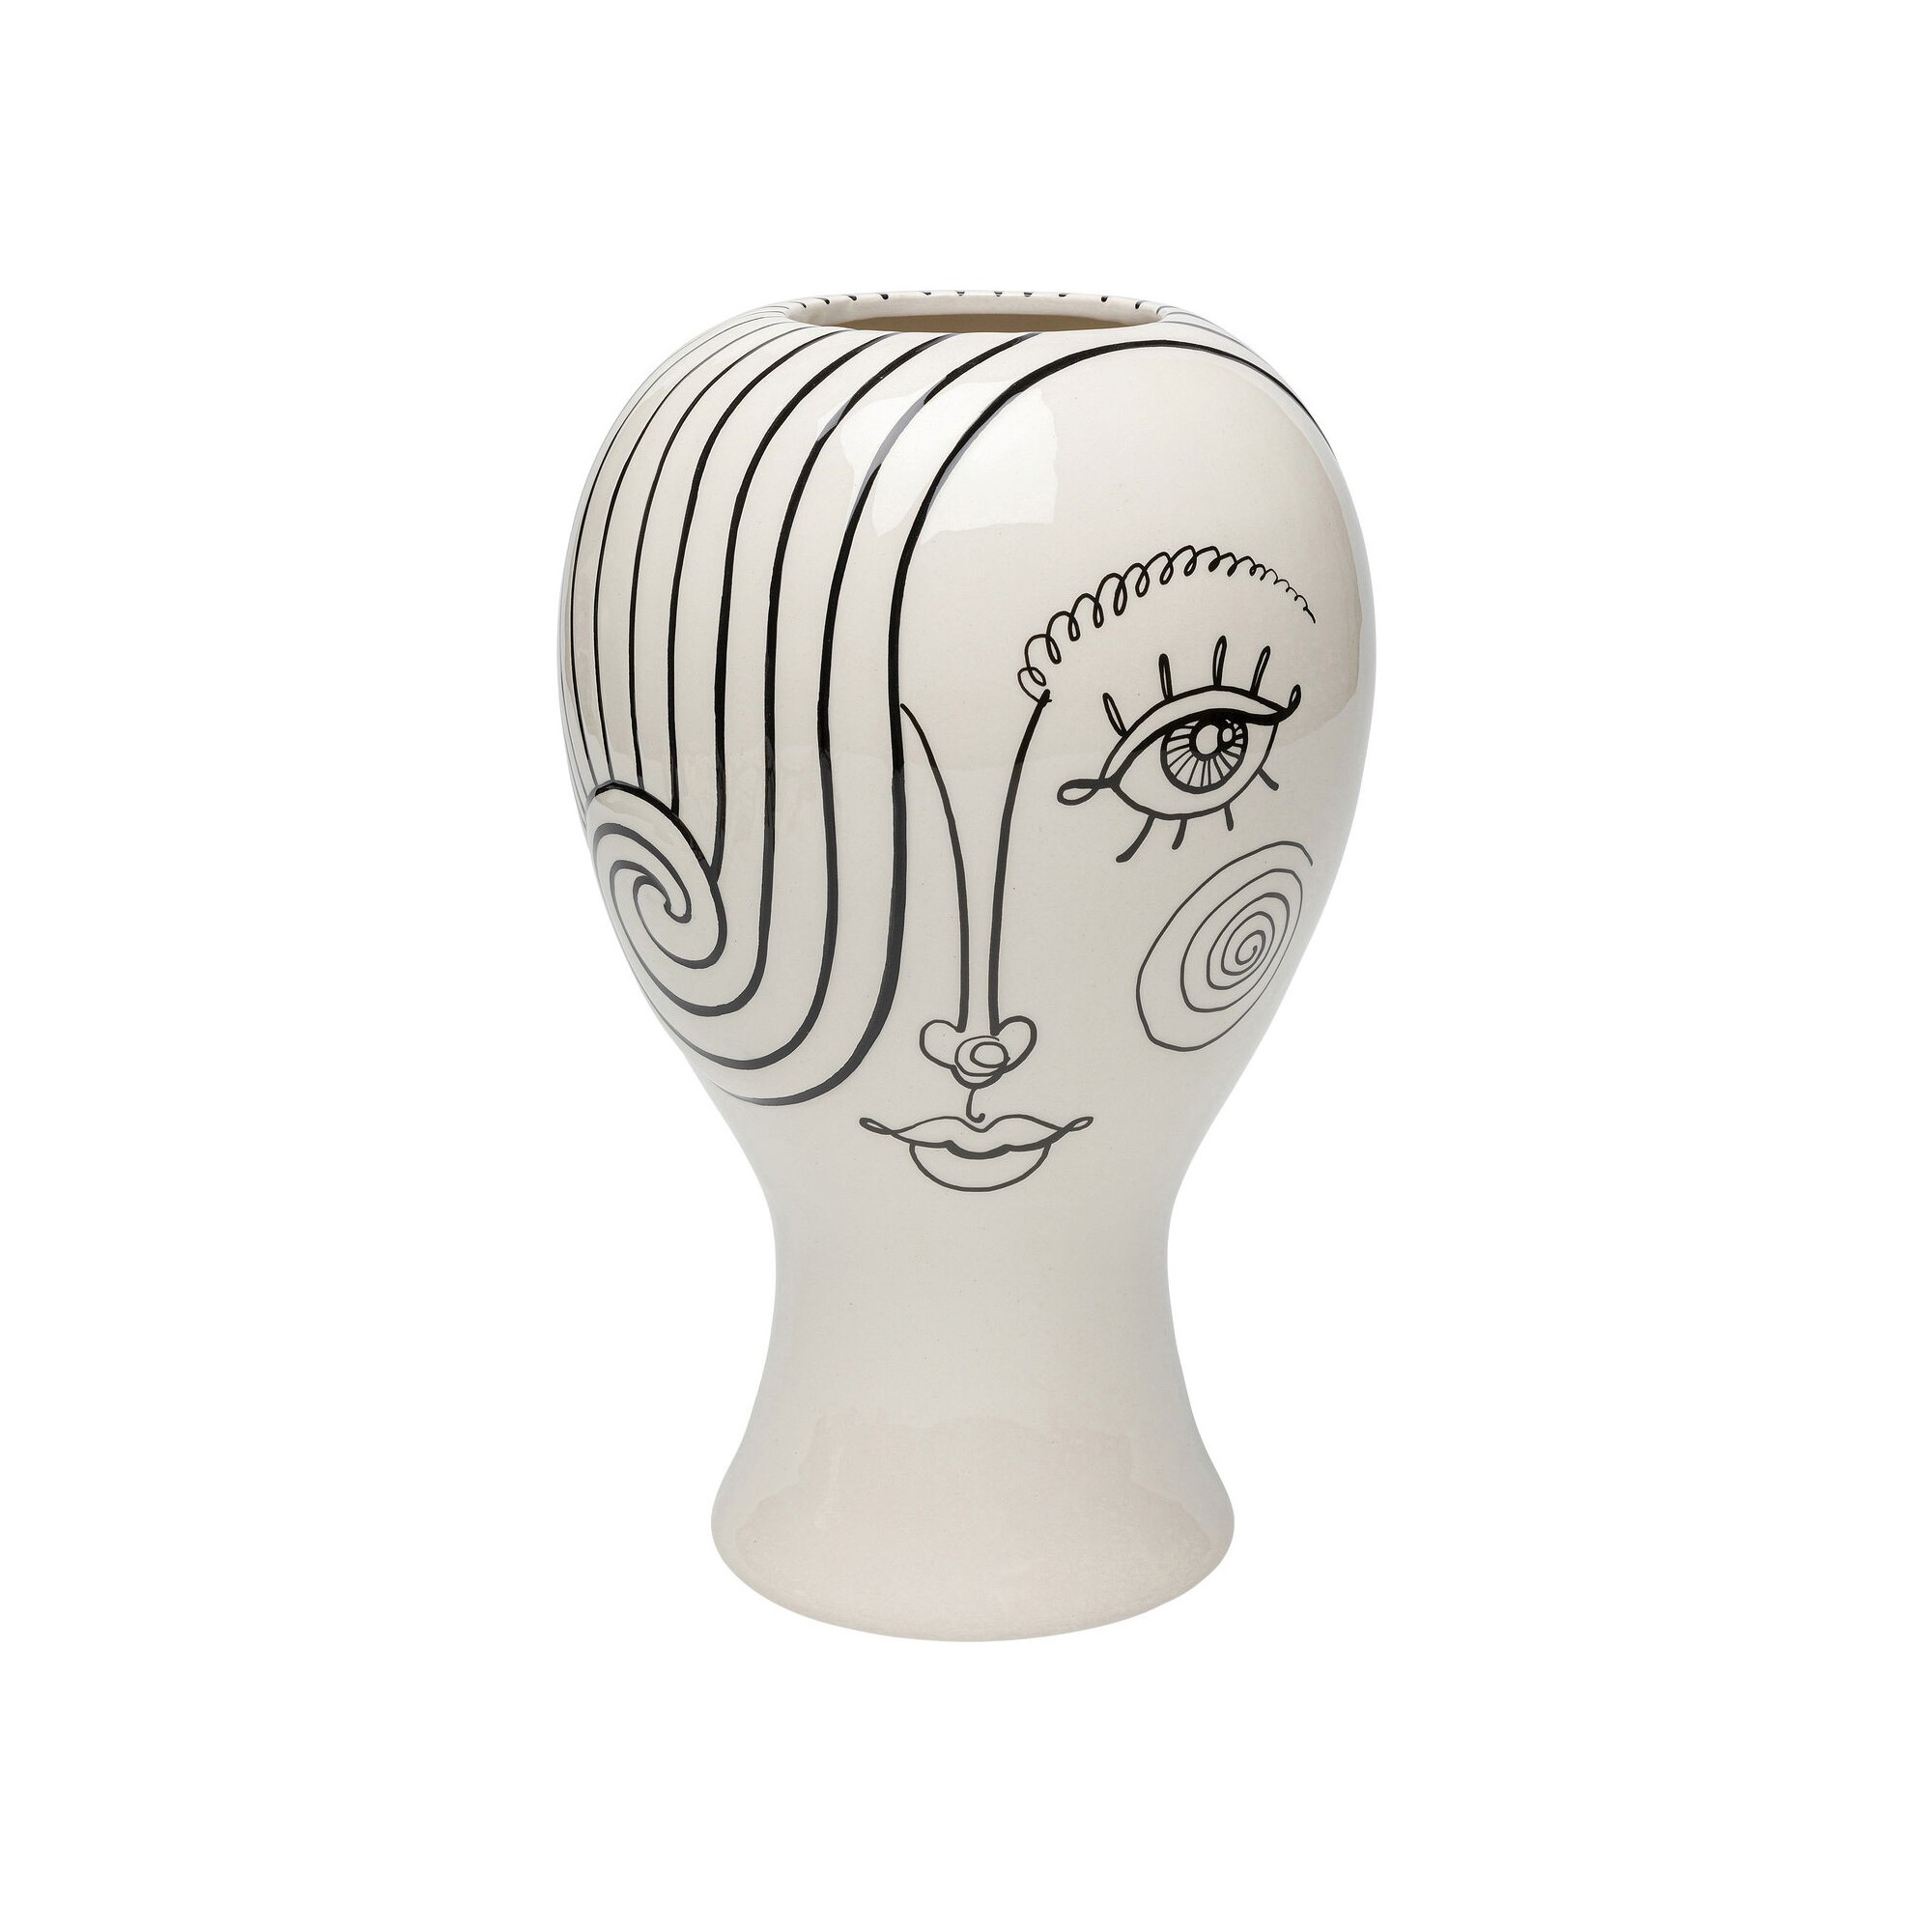 Vase Favola femme blanc et noir Kare Design